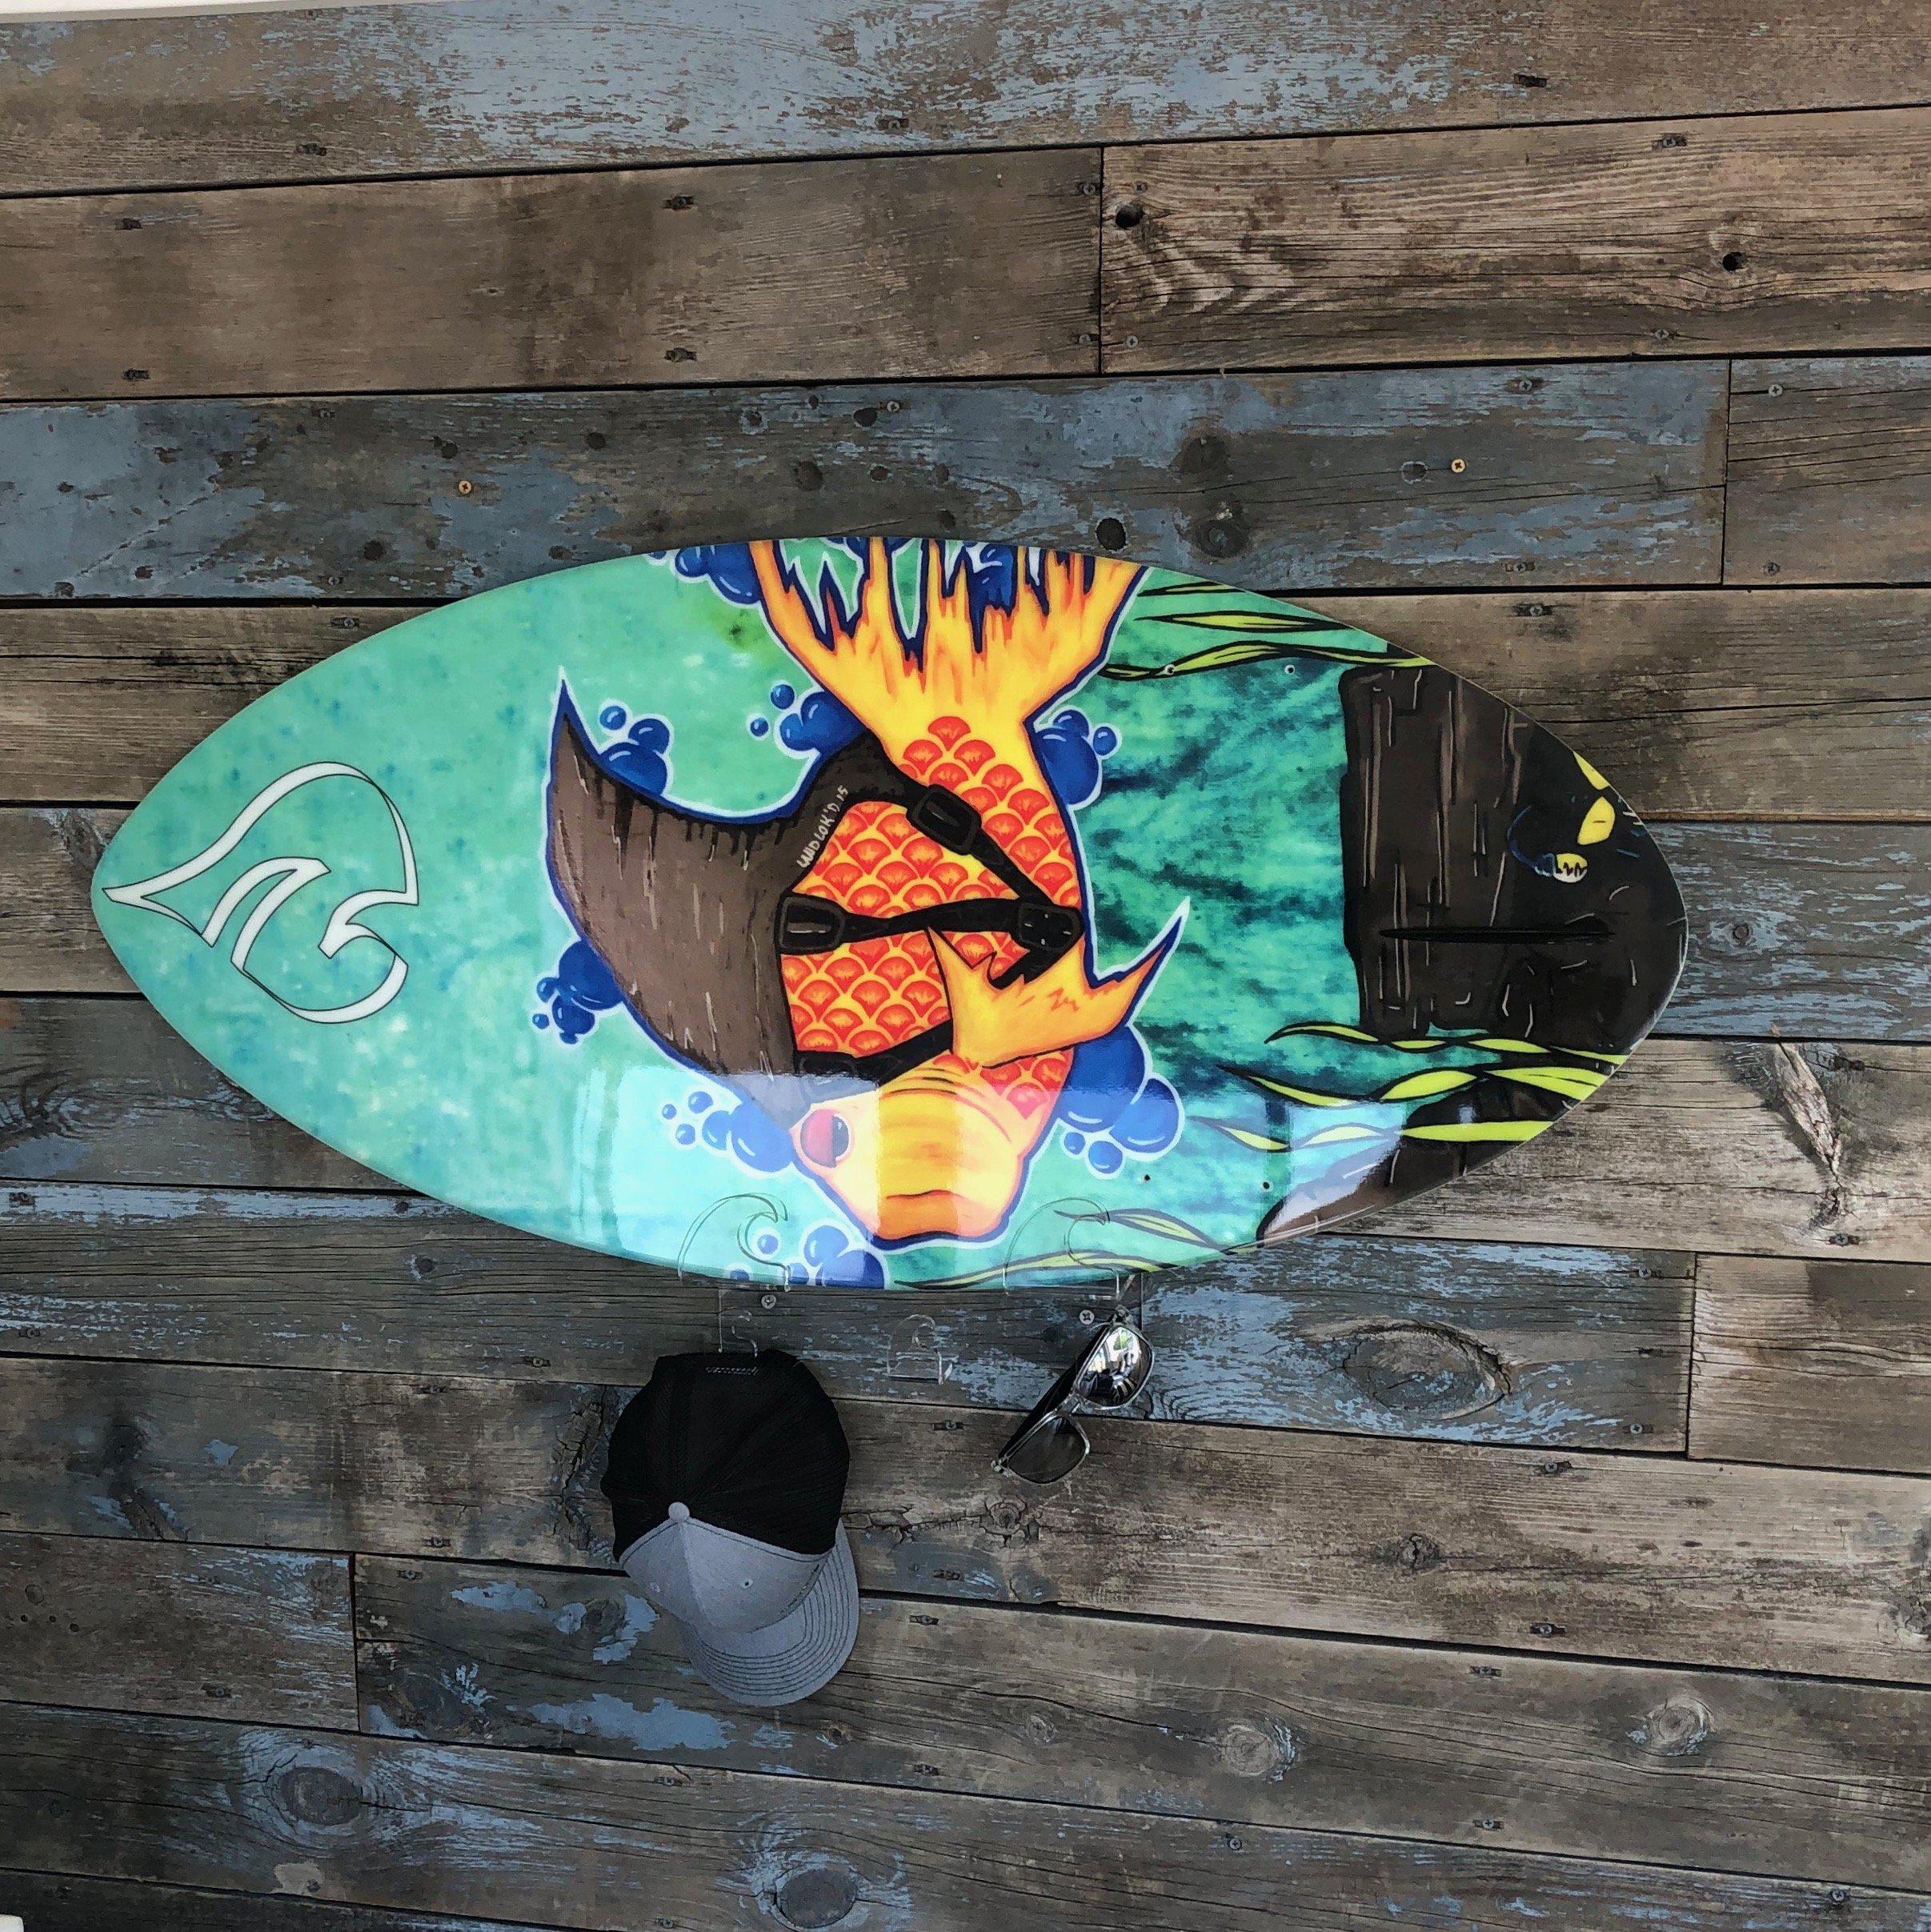 Cheap surfboard rack for wakesurf board goldie fish grom board